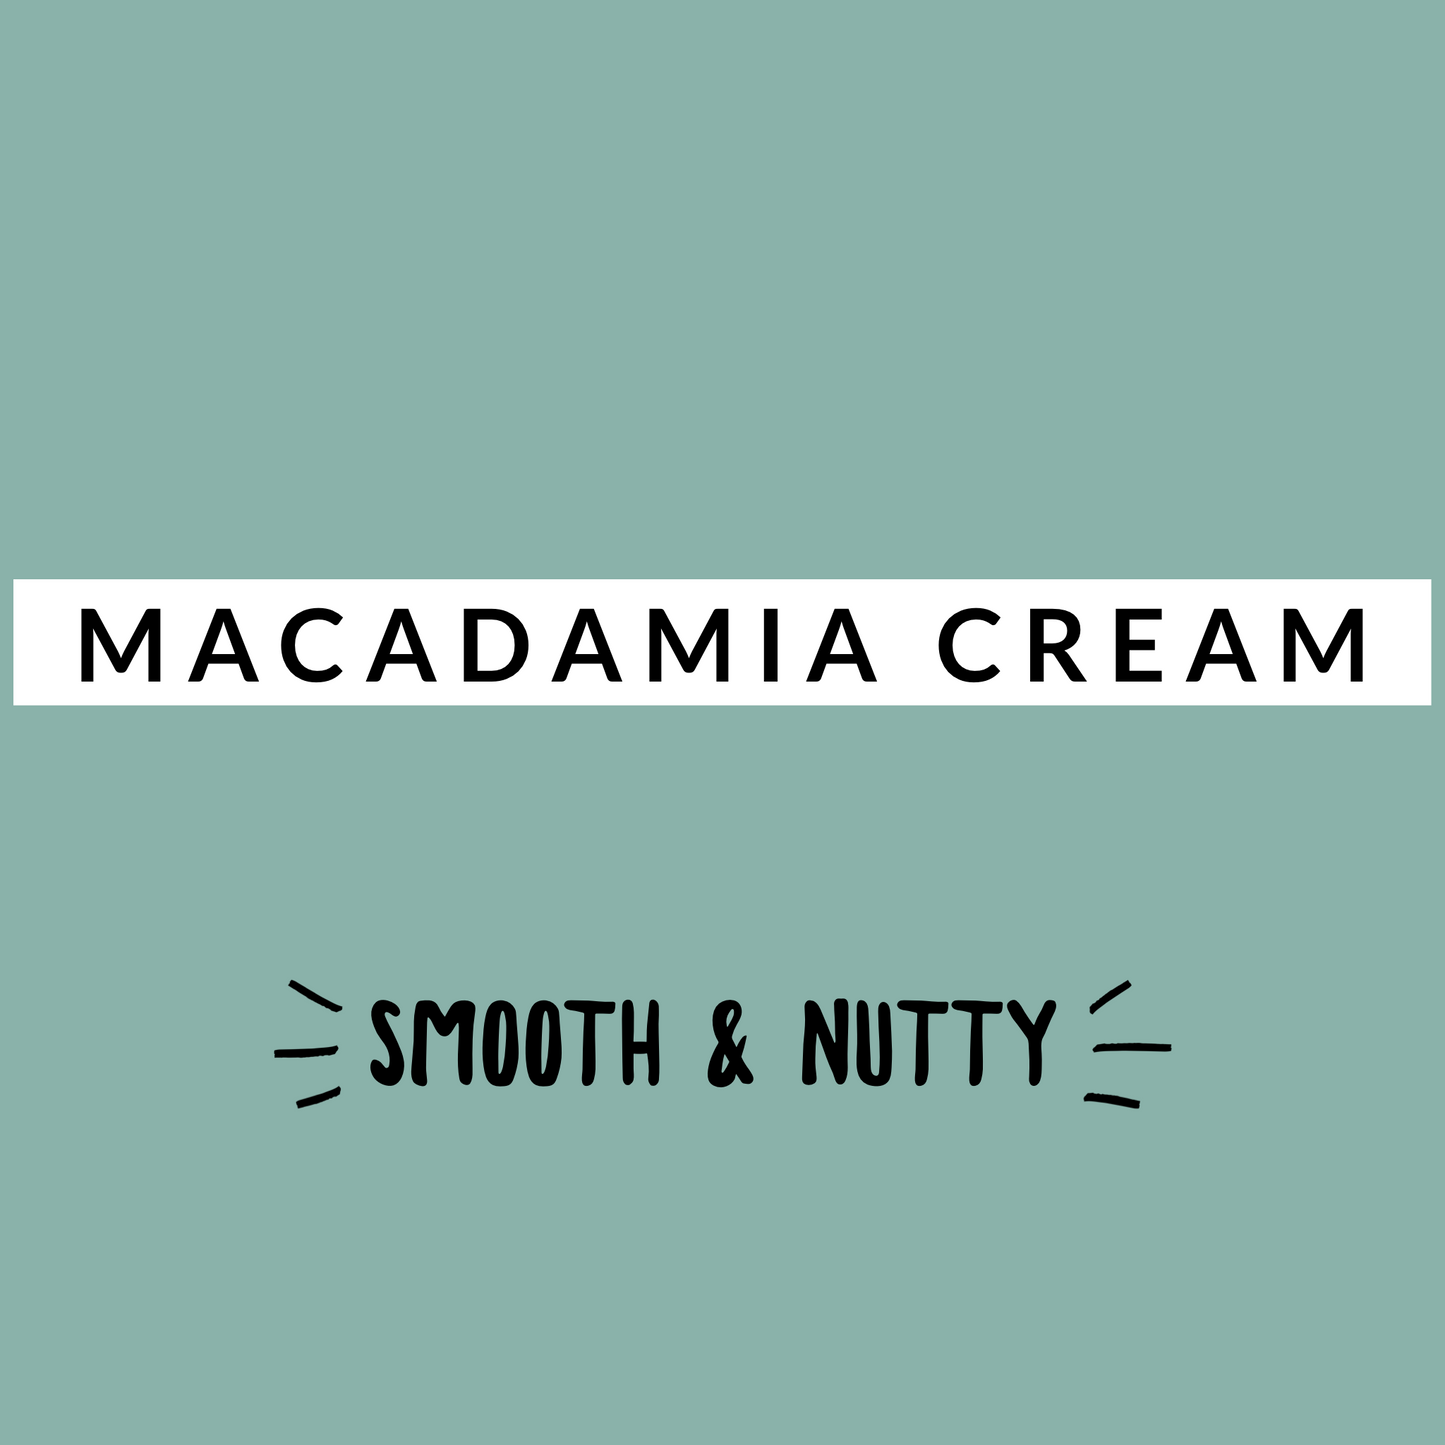 Macadamia Cream